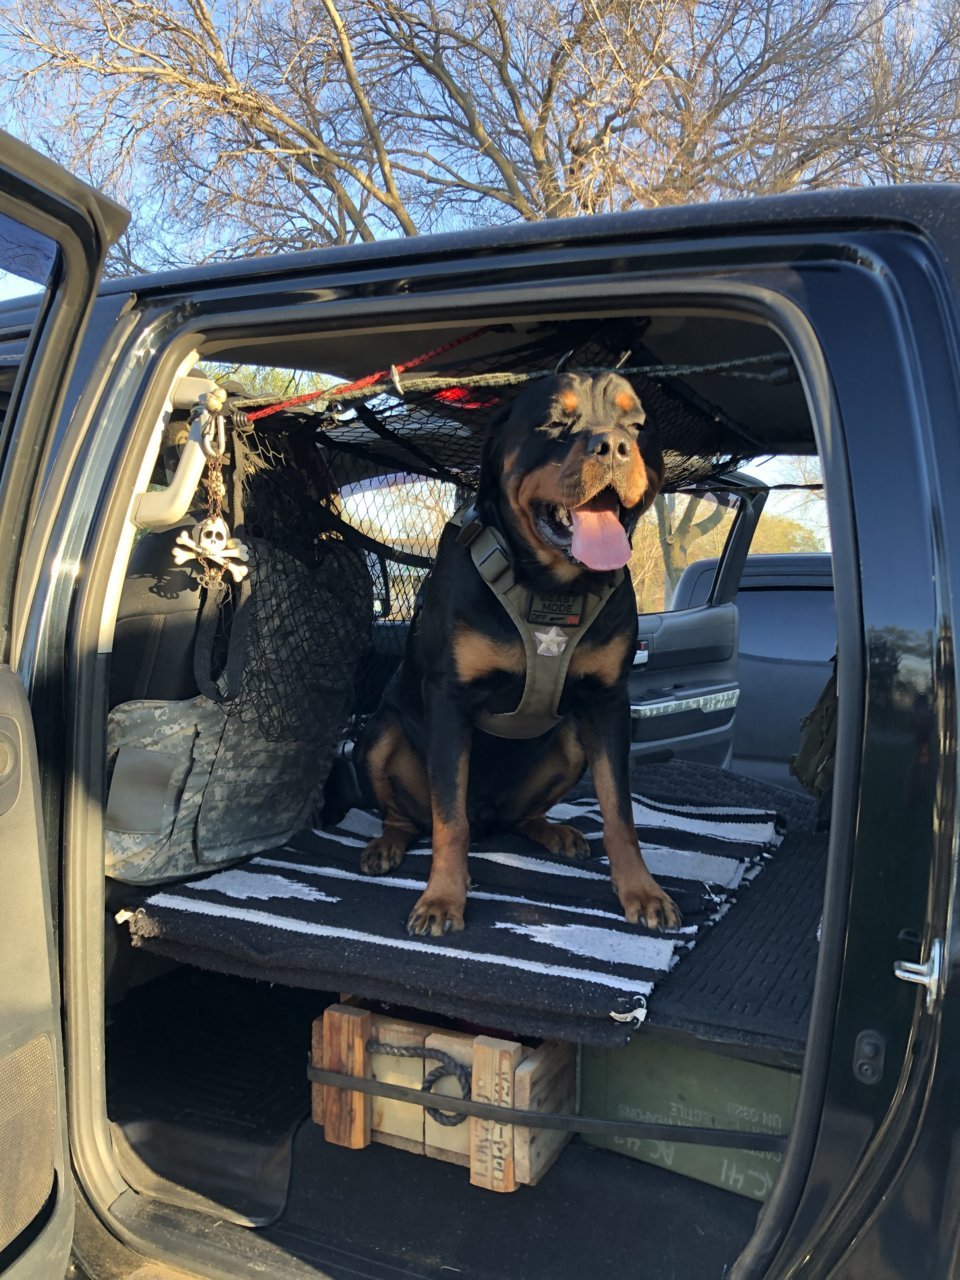 AMOCHIEN Back Seat Extender for Dogs - Backseat Pet Bridge, Dog Hammock  Covers Entire Back Seat, Rear Pet Foam Platform Divider Barrier Water